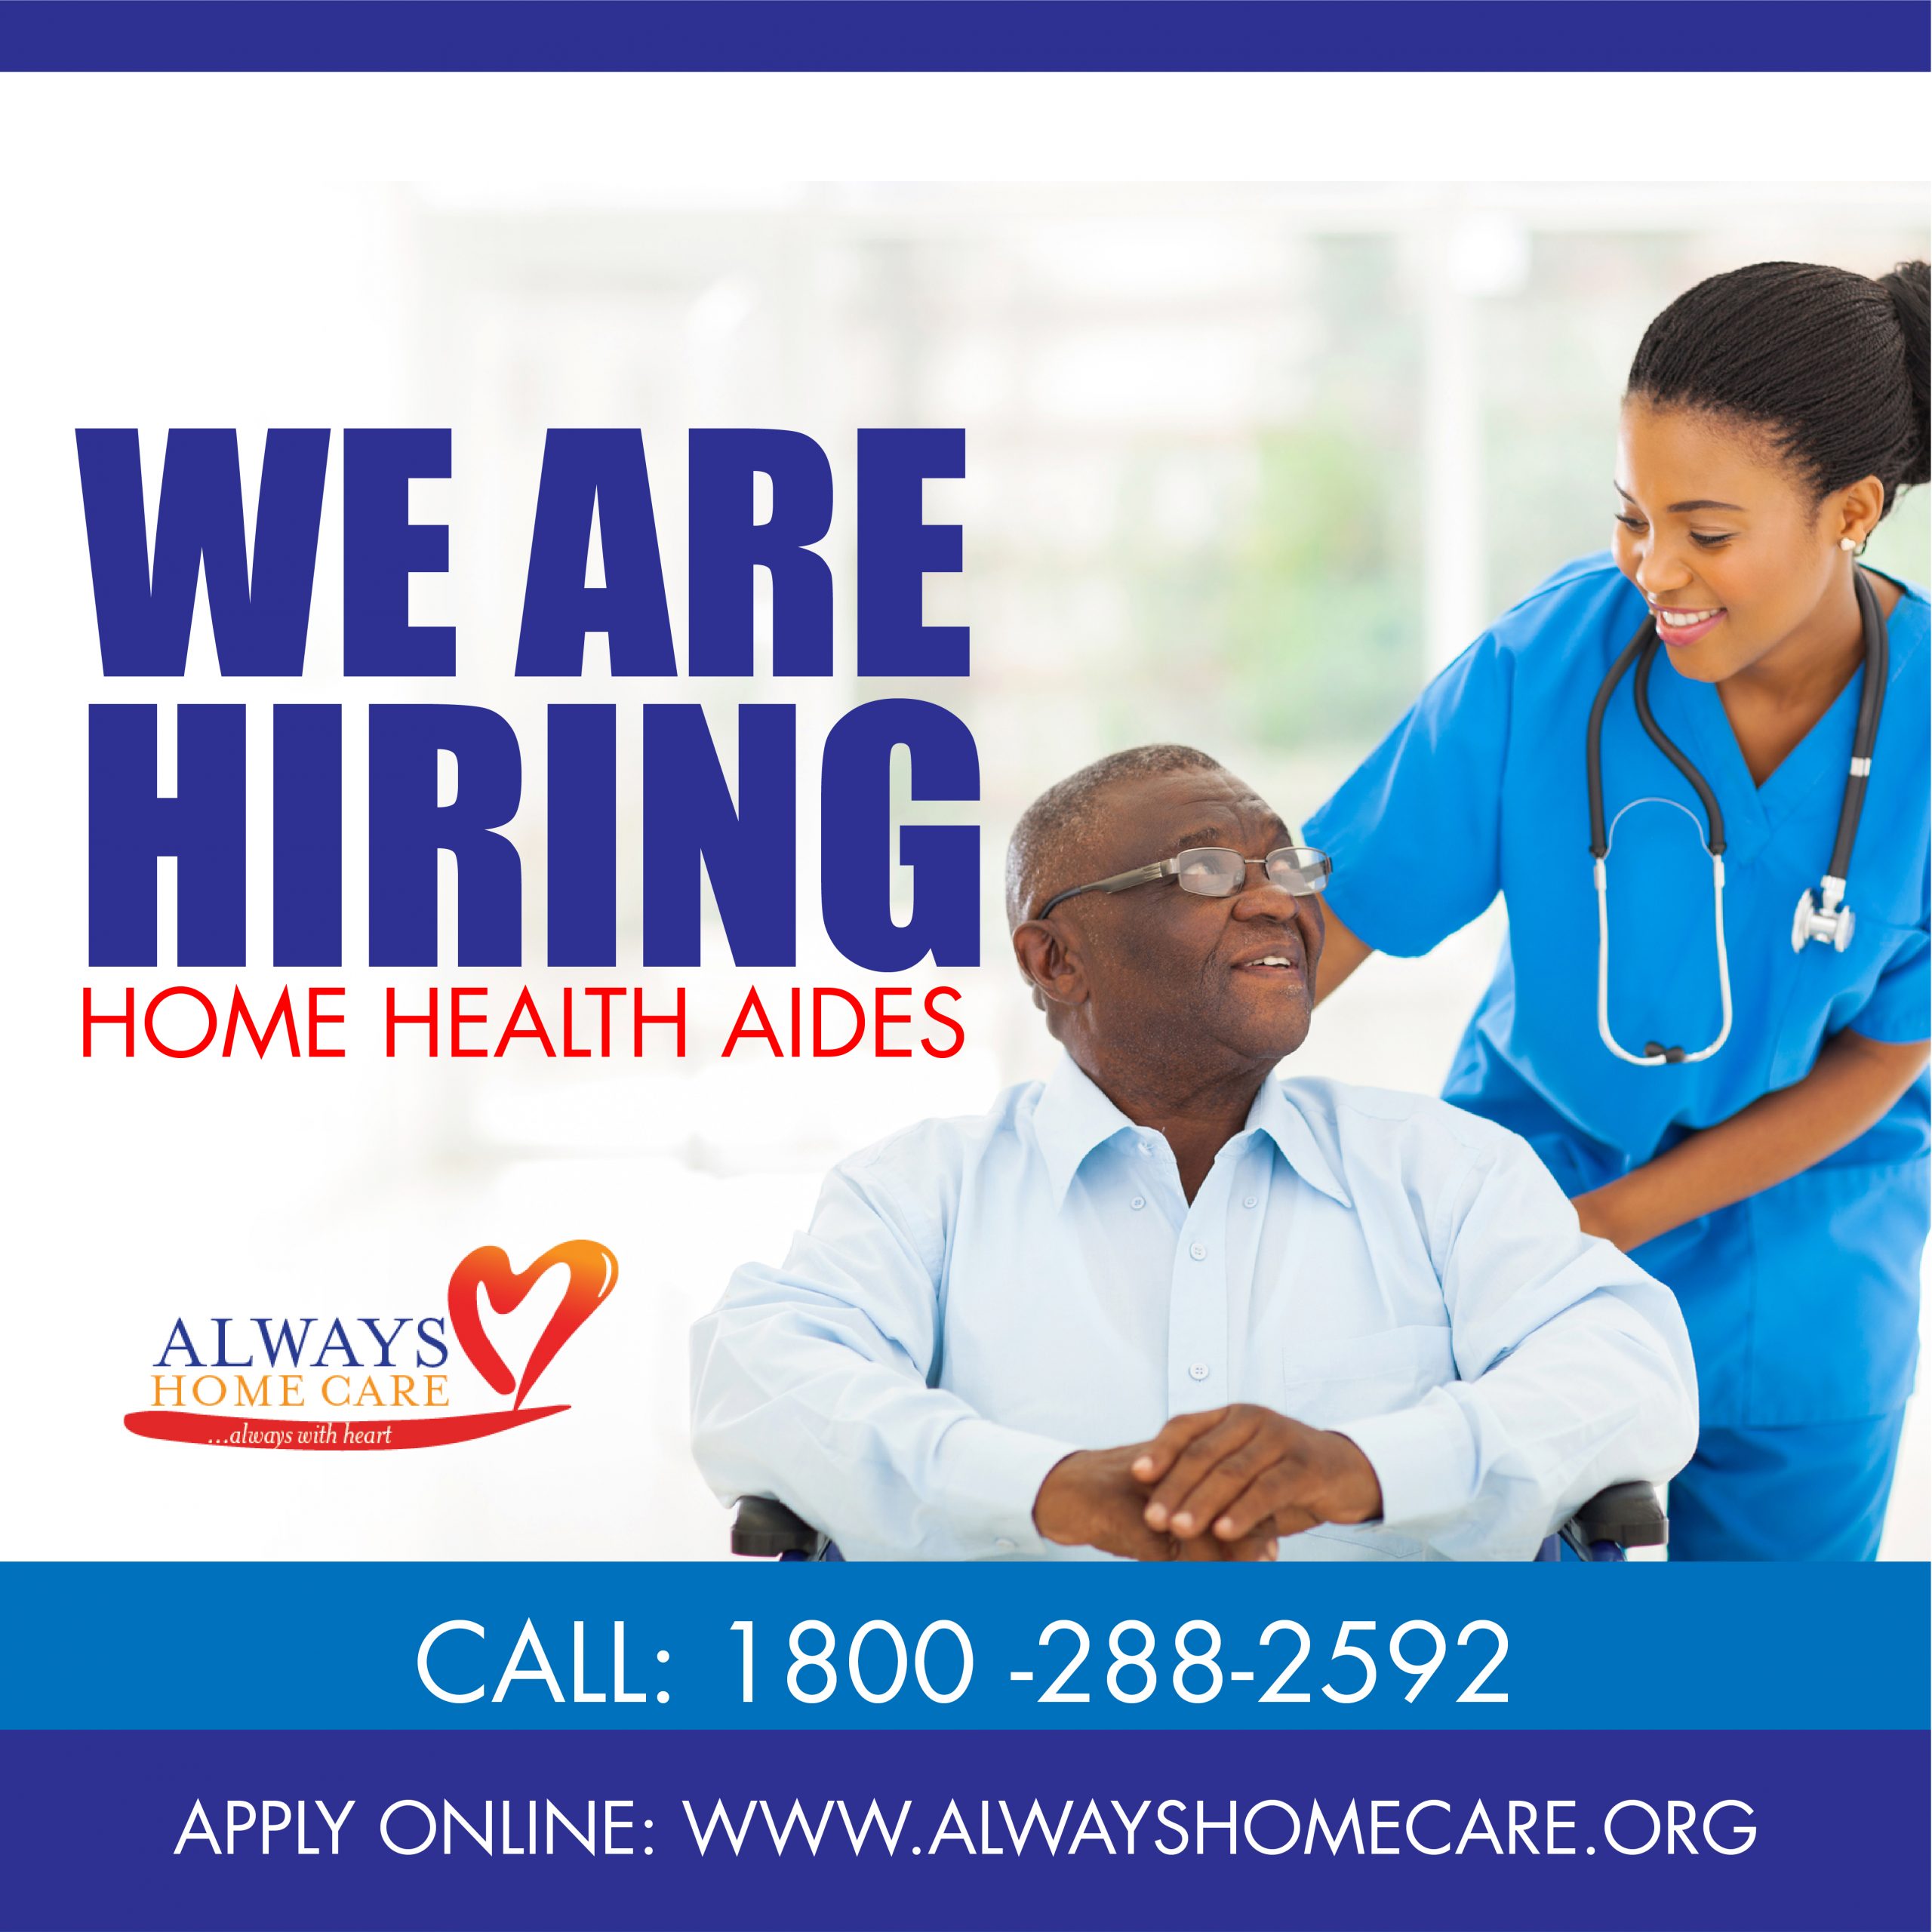 Home Health Aide Jobs In Nj : Hha Certification Flemington Nj Find Home